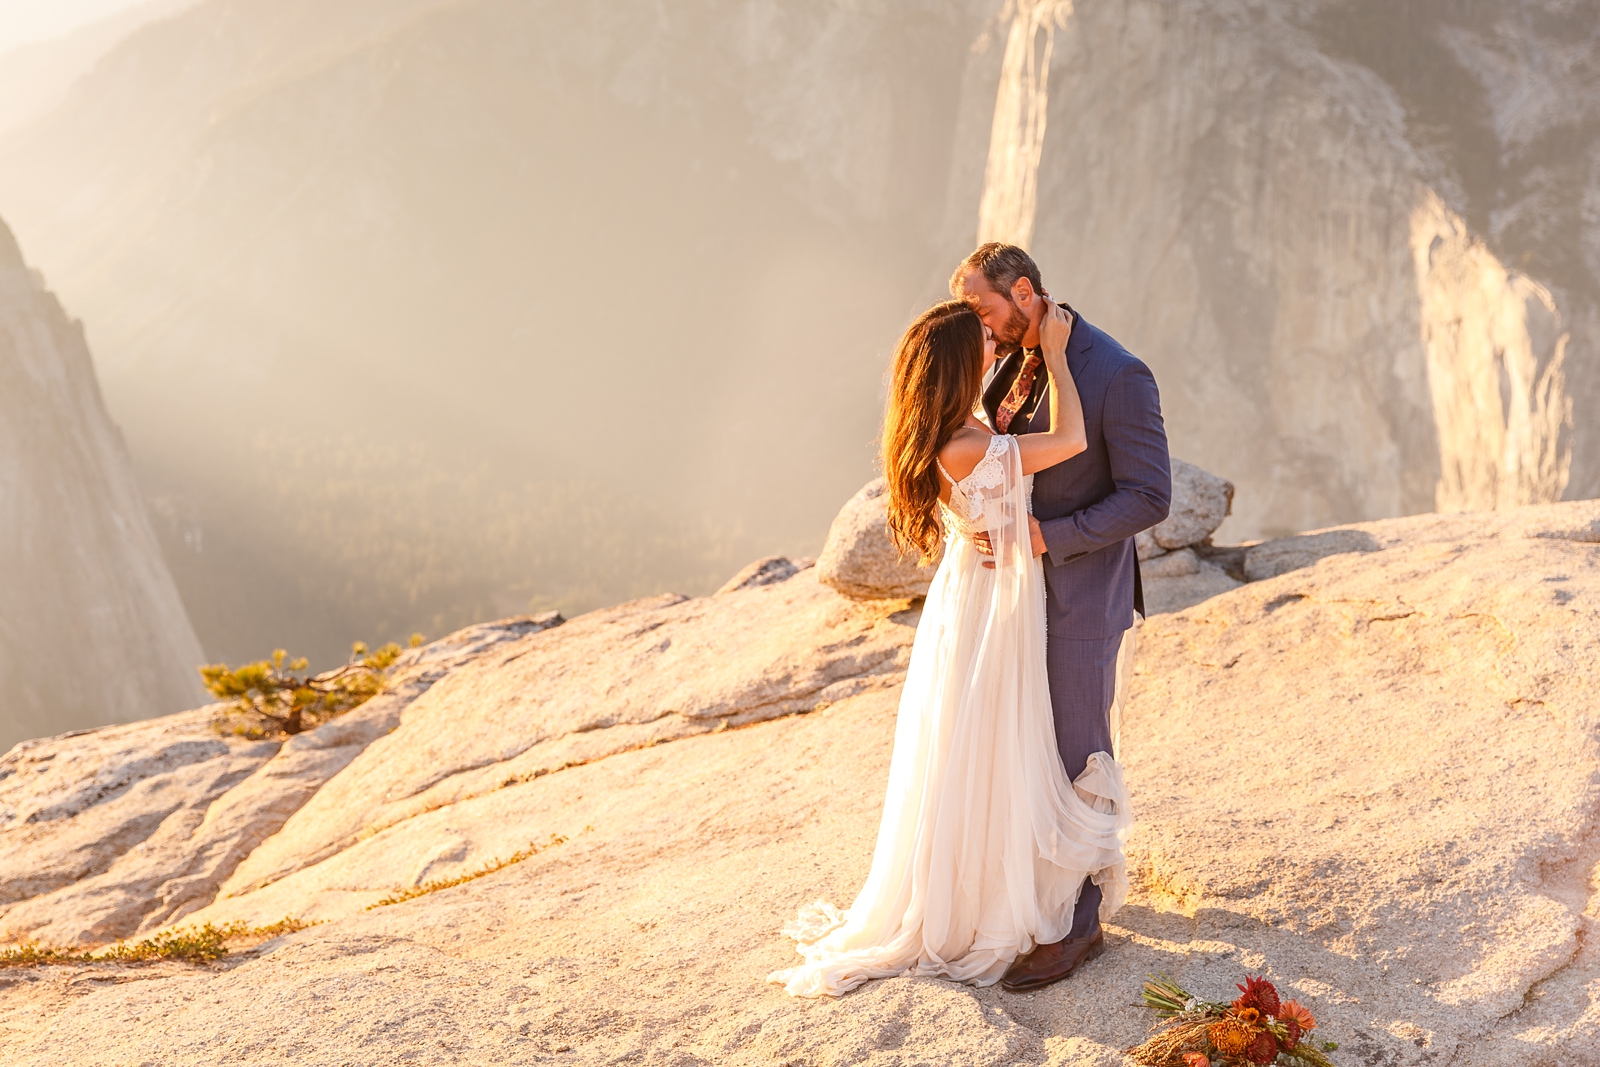 Epic kiss at this couple's adventurous Taft Point elopement.